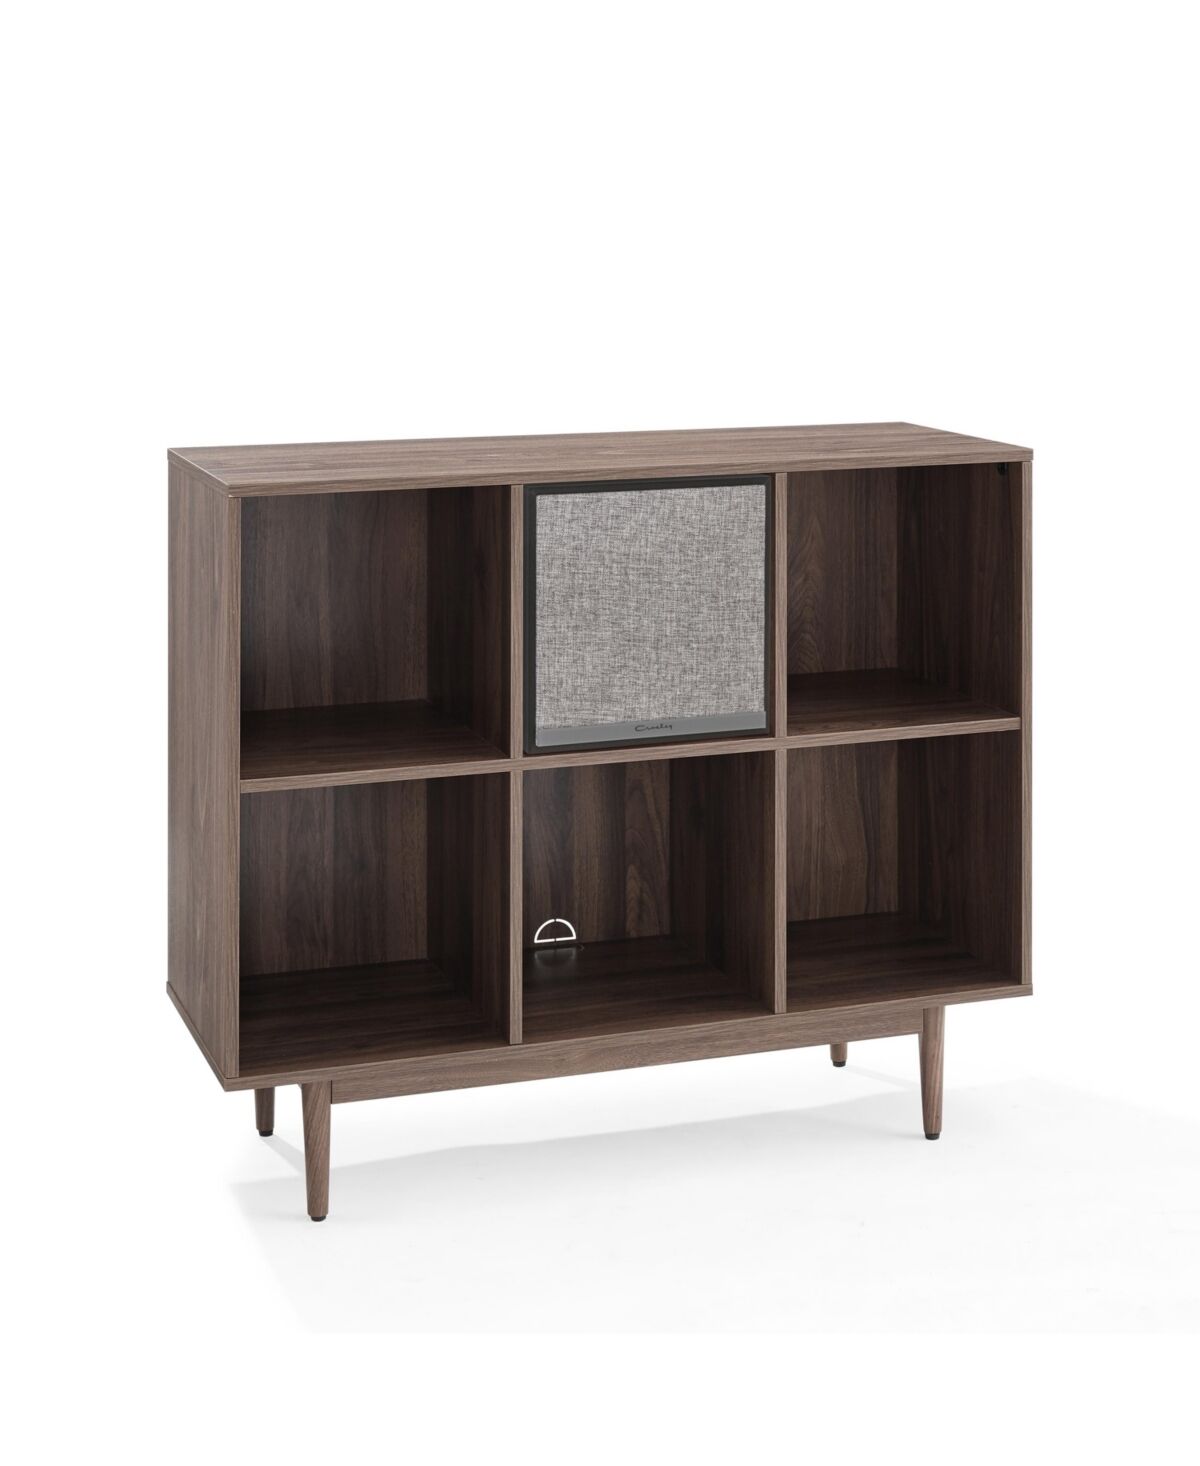 Crosley Liam 6 Cube Record Storage Bookcase with Speaker - Walnut